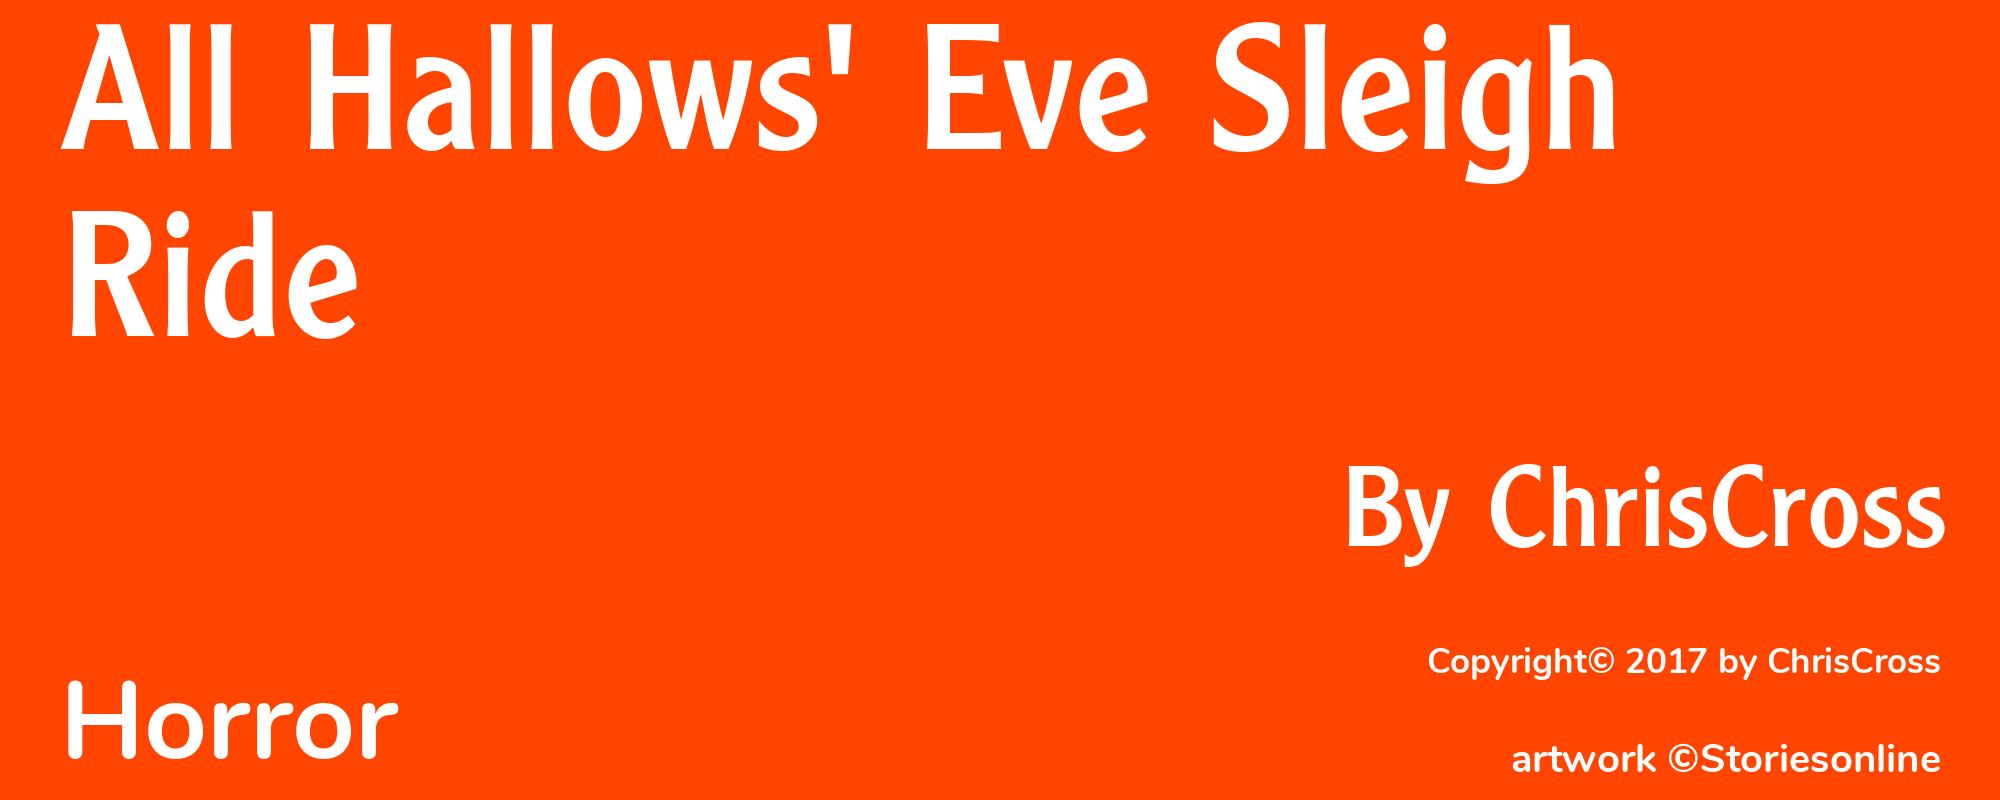 All Hallows' Eve Sleigh Ride - Cover